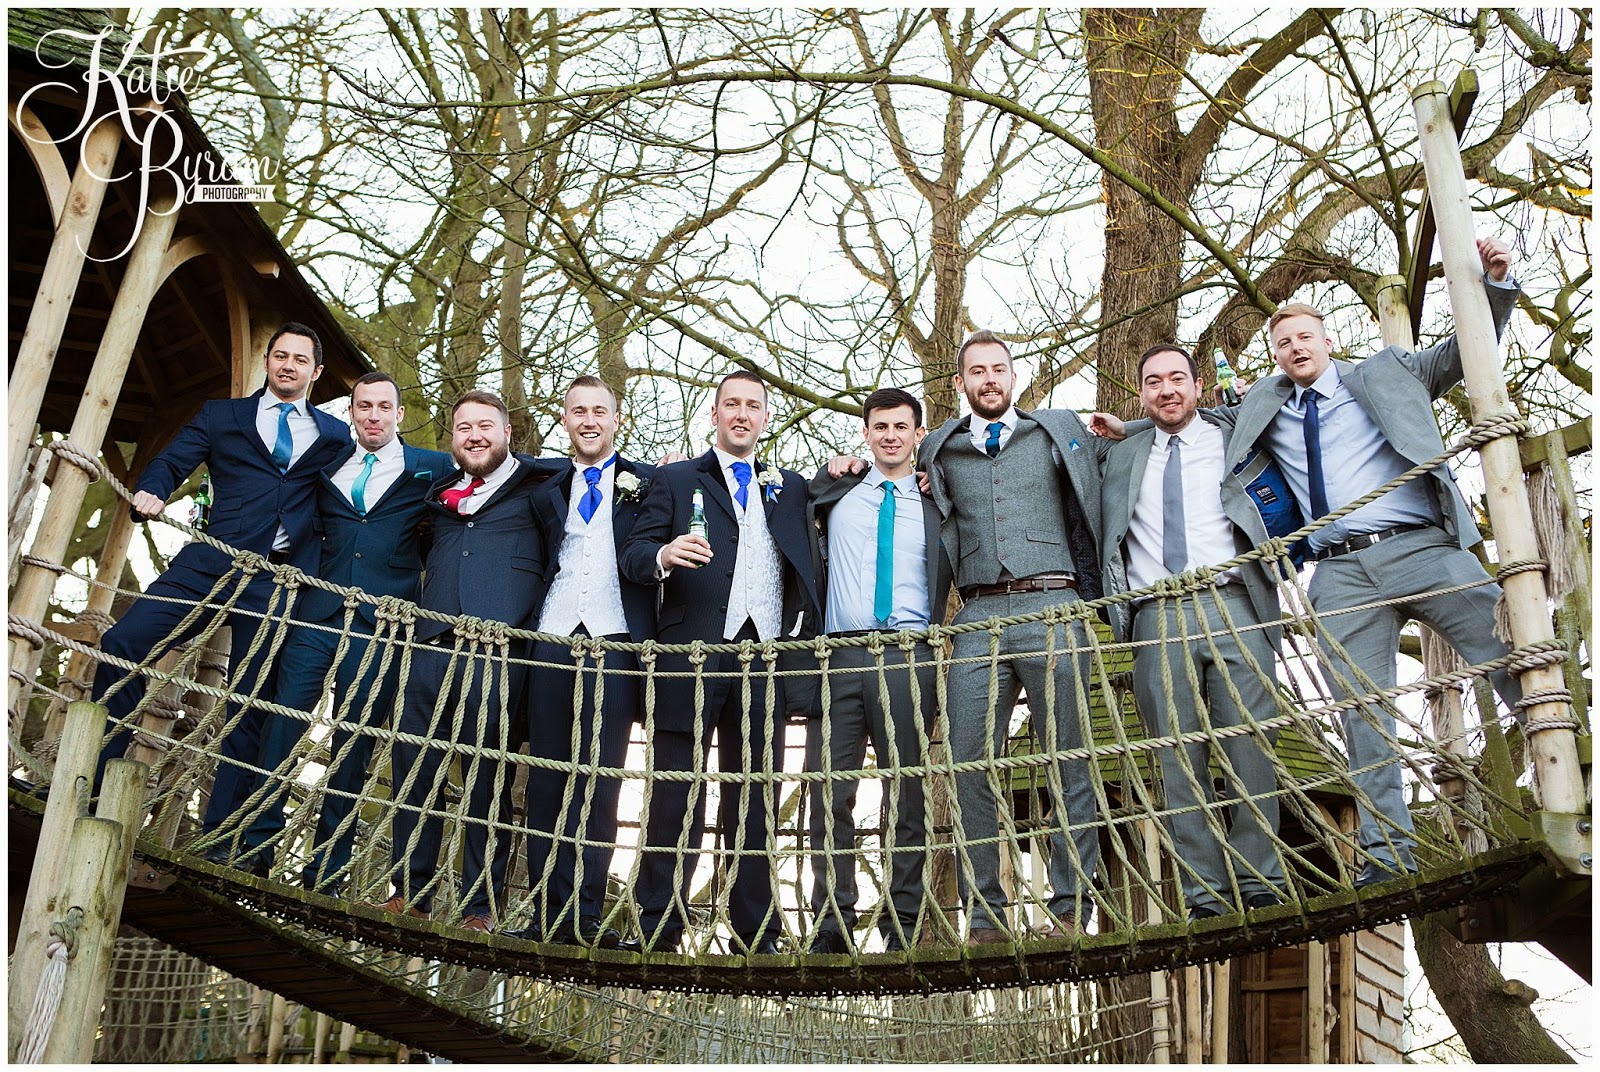 alnwick treehouse, , ellingham hall, ellingham hall wedding, katie byram photography, alnwick treehouse wedding, alnwick garden wedding, alnwick wedding, 